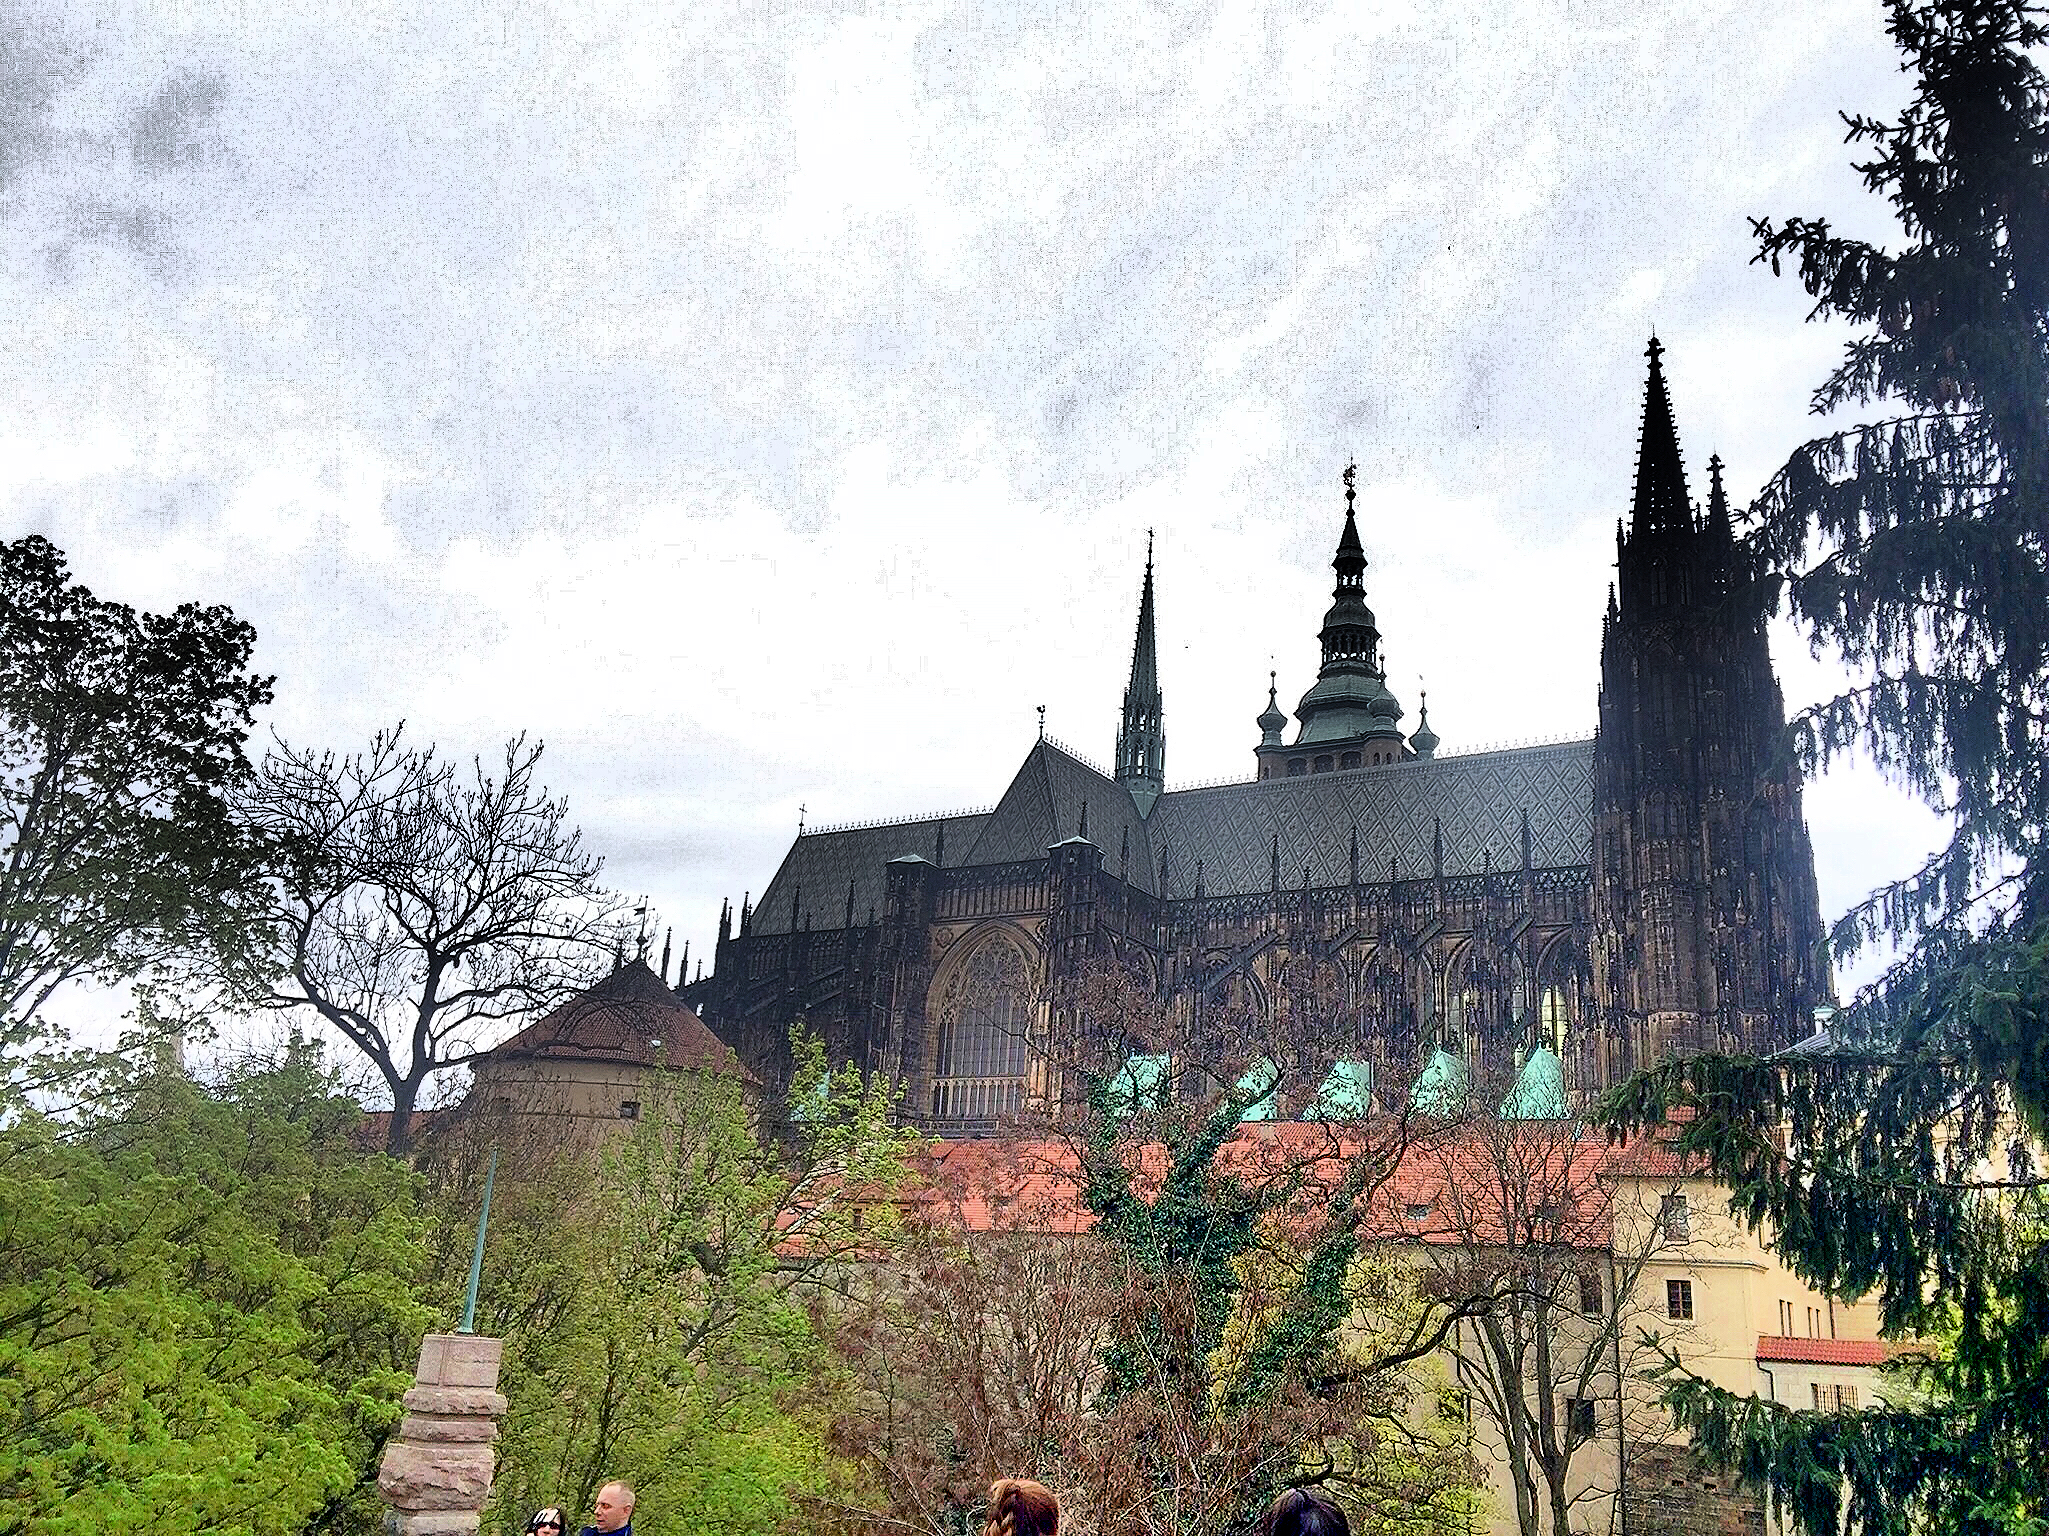 Prague Top 10 Things To Do In Prague Farida Israil S Blog